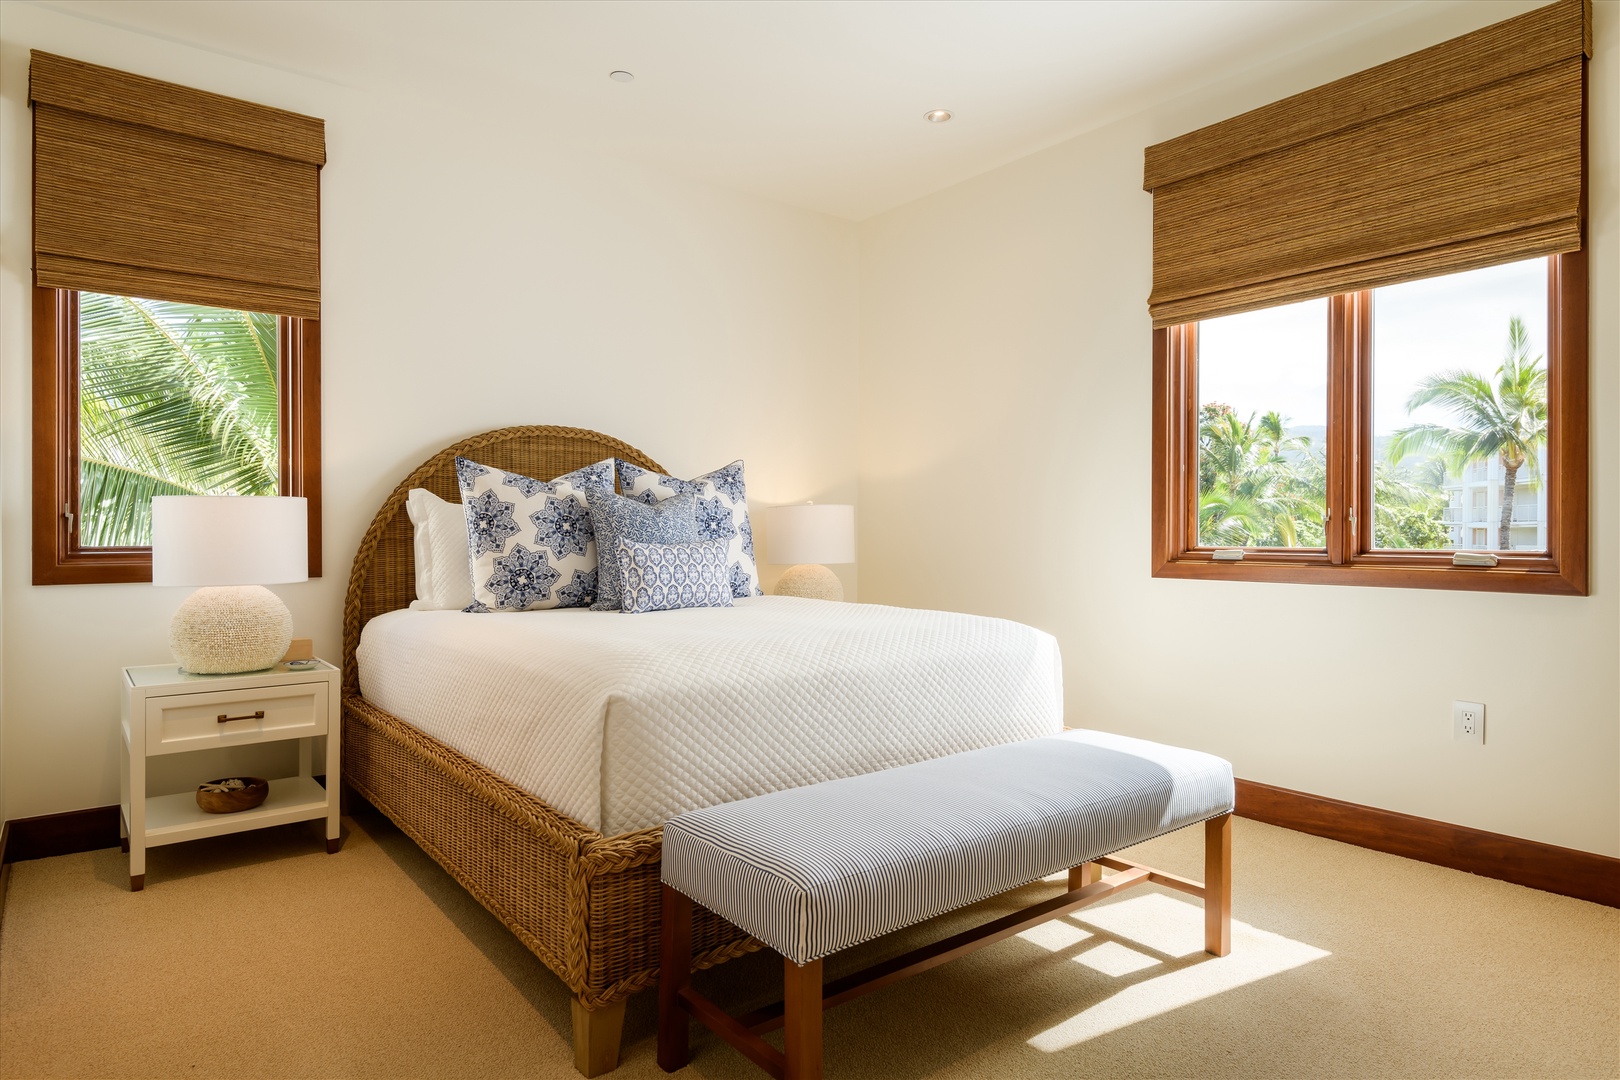 Wailea Vacation Rentals, Blue Ocean Suite H401 at Wailea Beach Villas* - 2nd Mountain View Bedroom